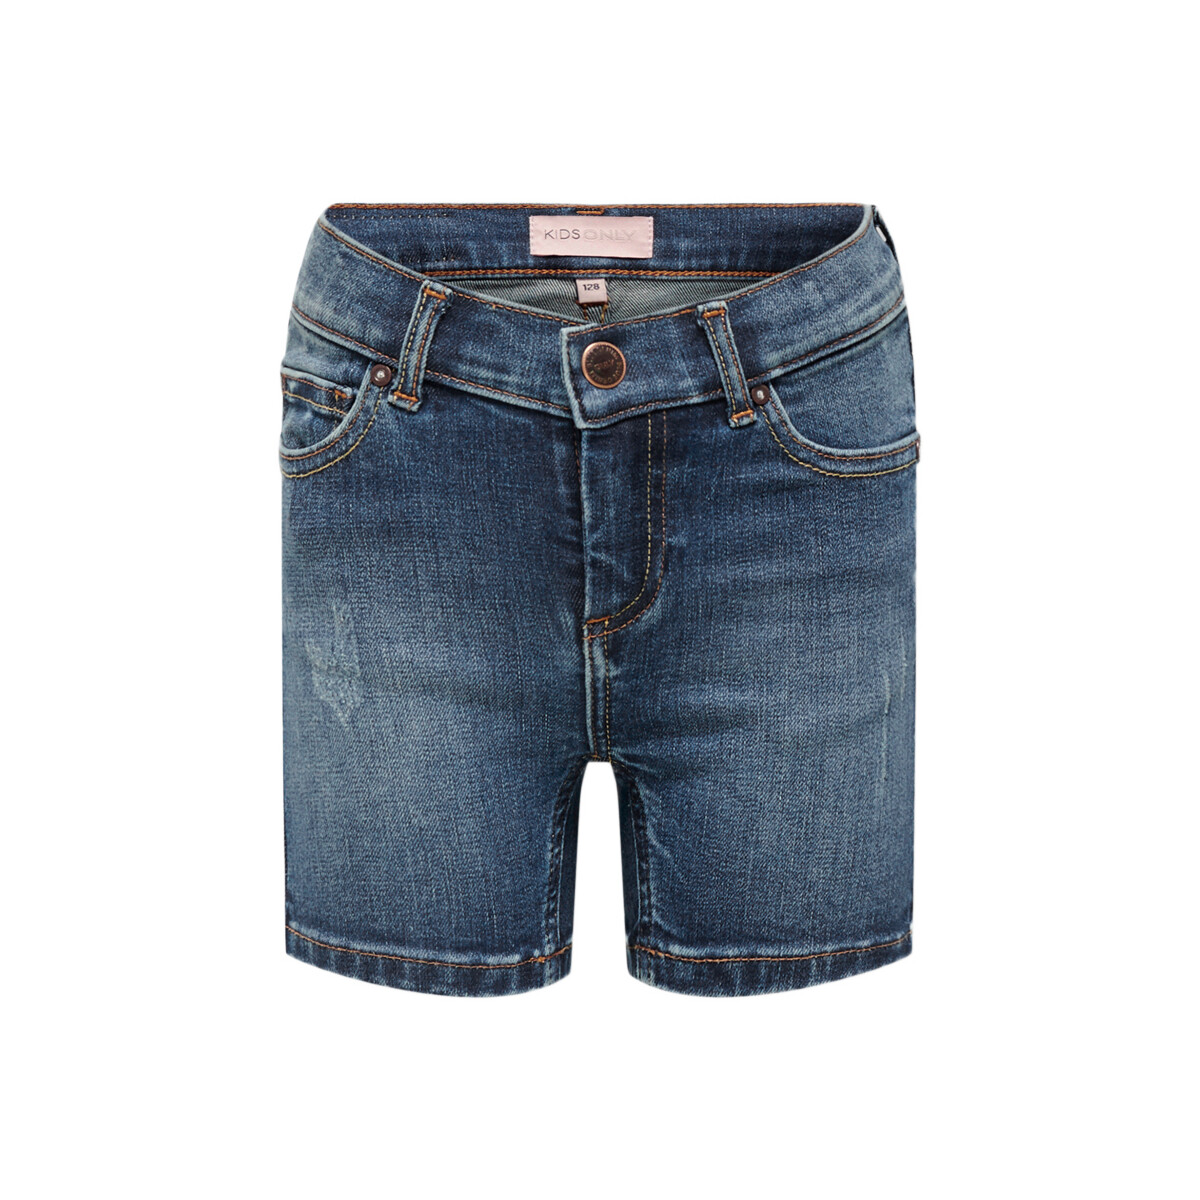 Vêtements Fille Shorts / Bermudas Kids Only 15201450 Bleu